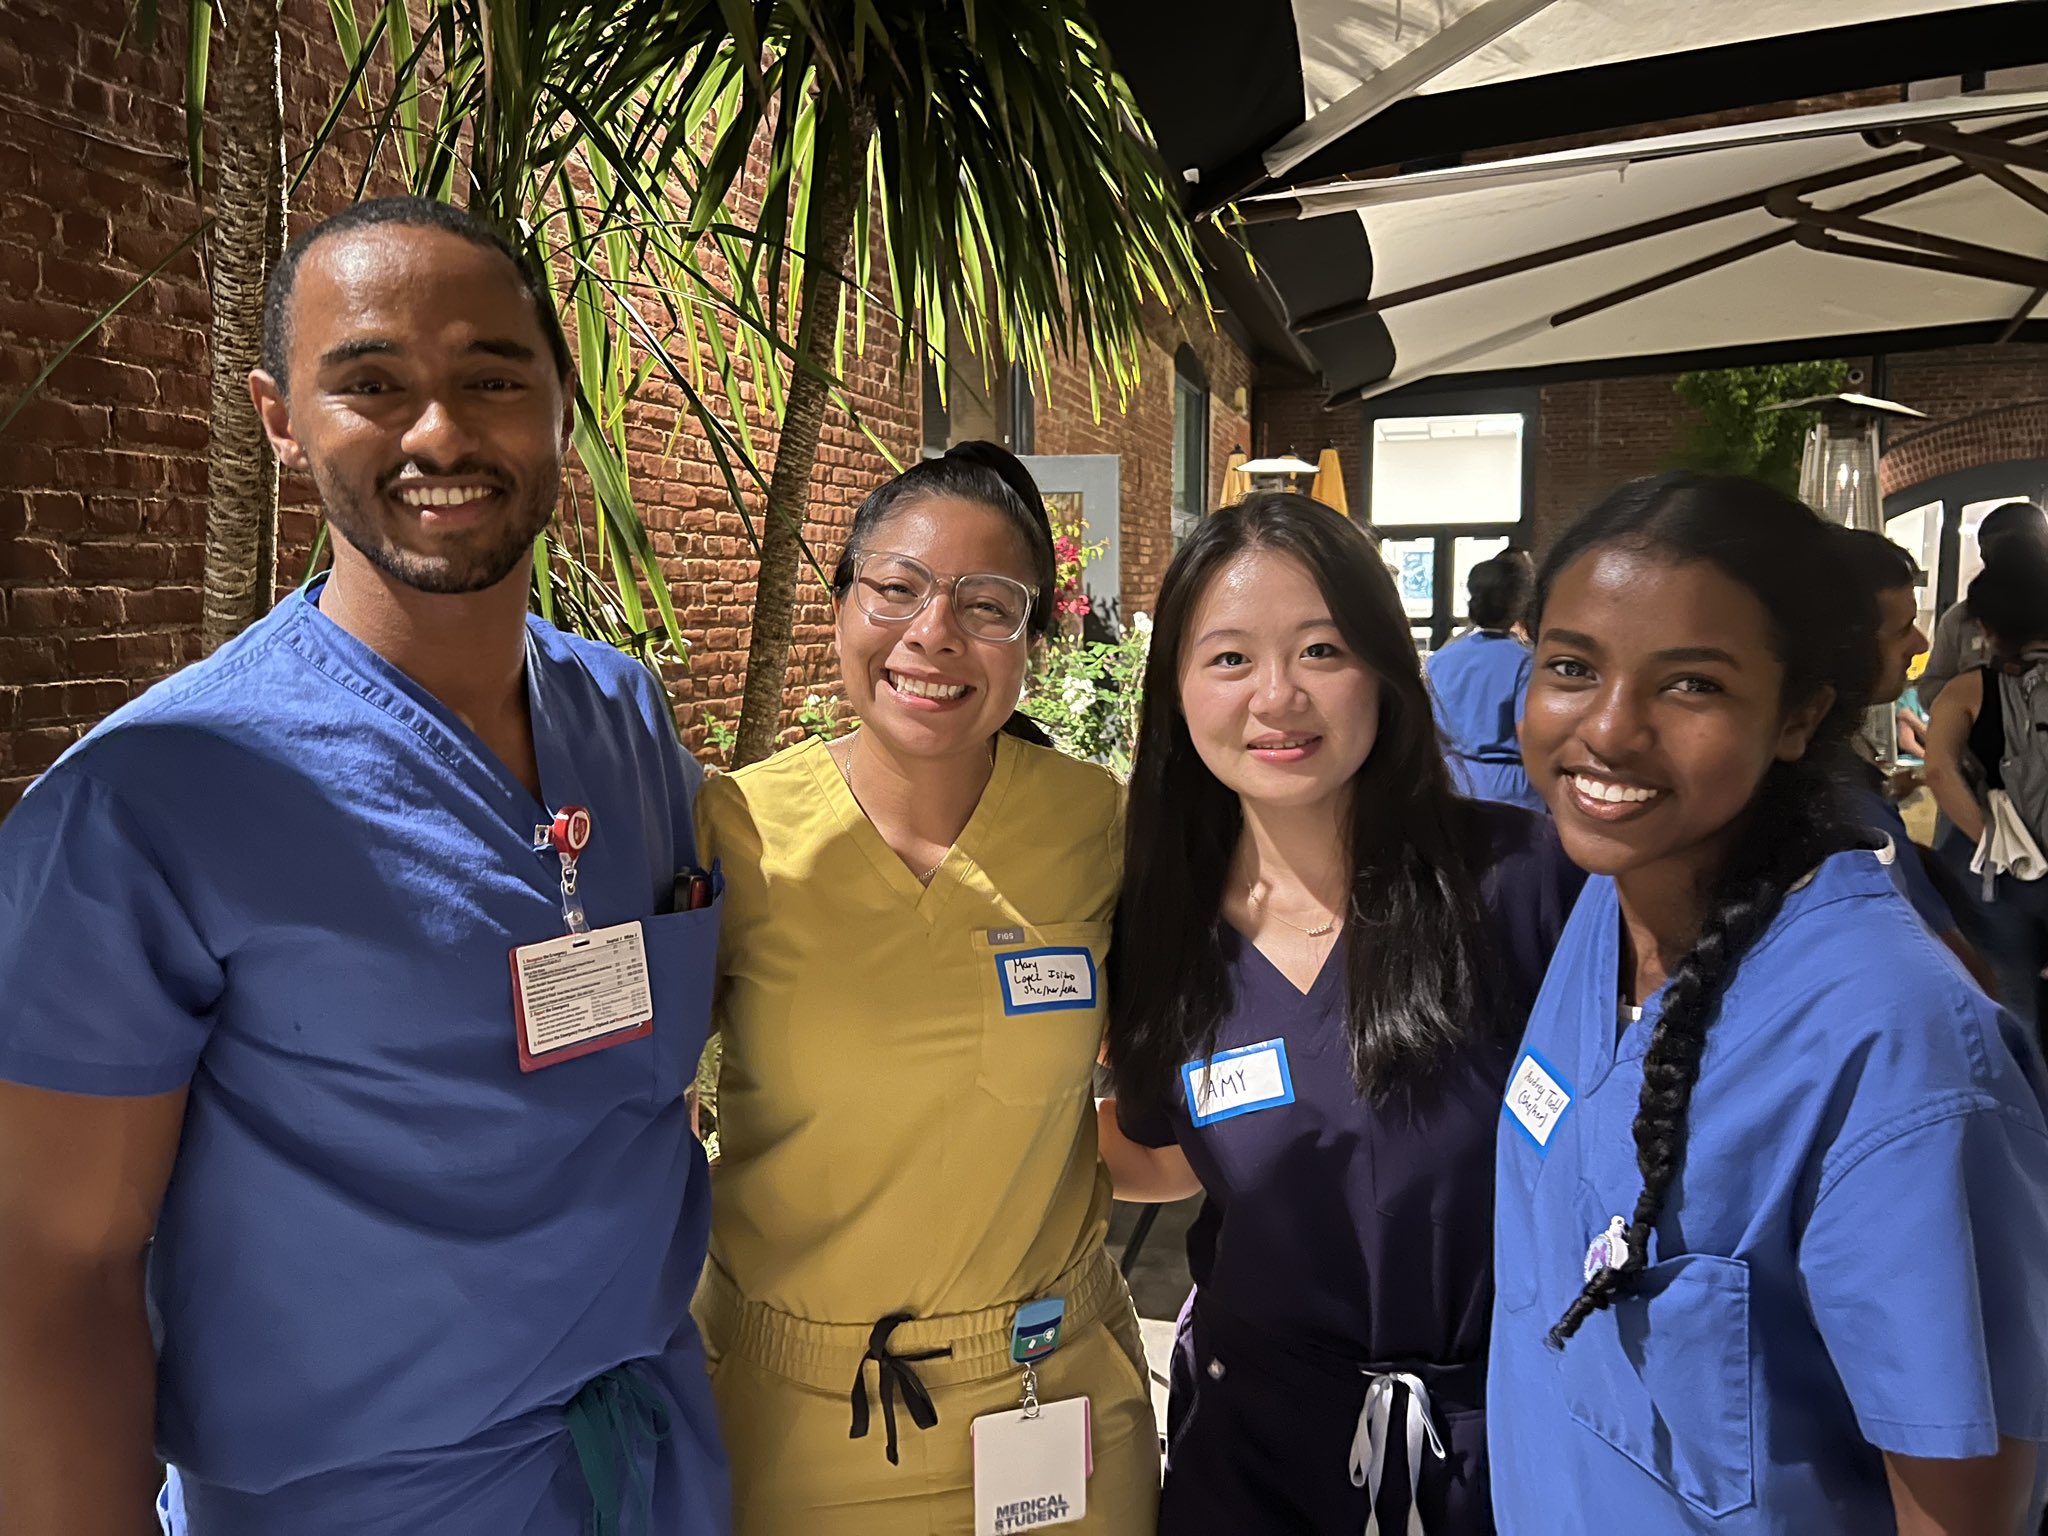 Stanford Medicine's Diversity Week, Office of Diversity in Medical  Education